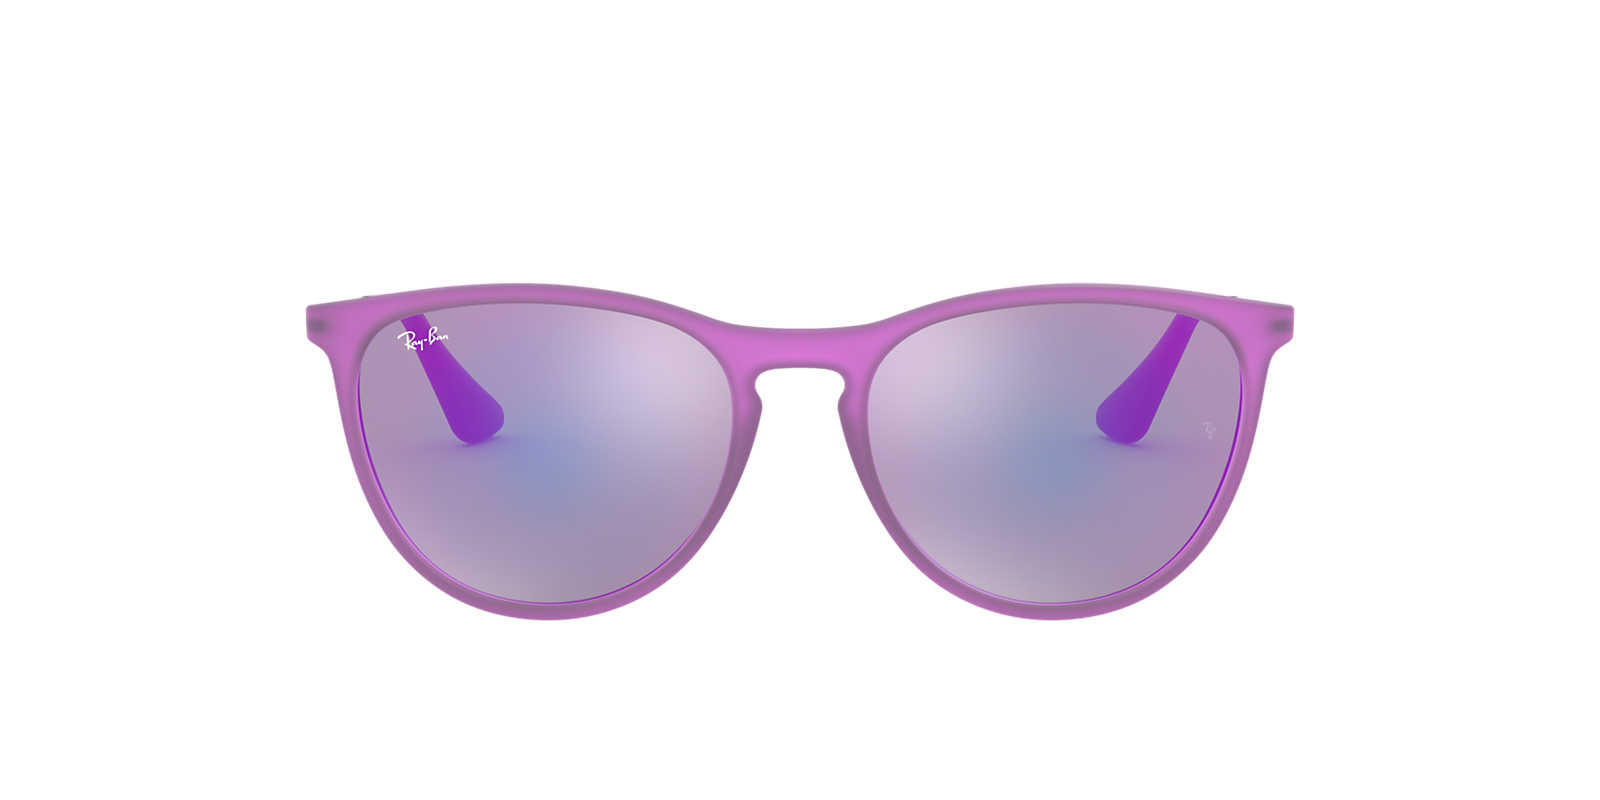 2019 cheap ray ban sunglasses deals online 2019